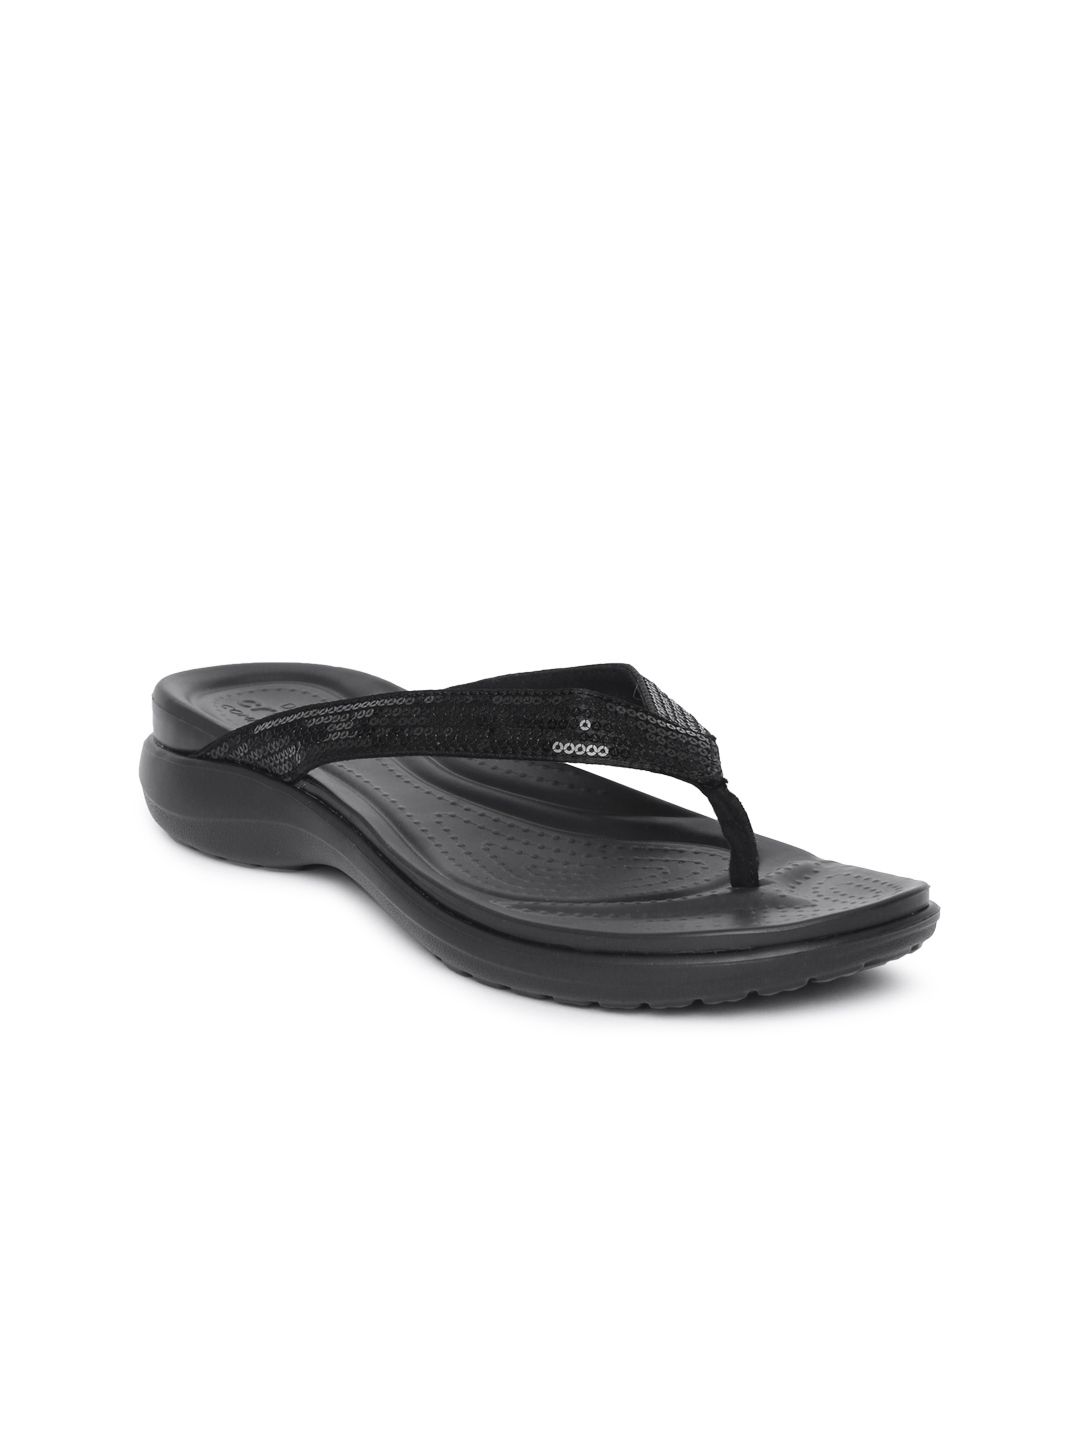 Crocs Women Black Solid Thong Flip-Flops Price in India